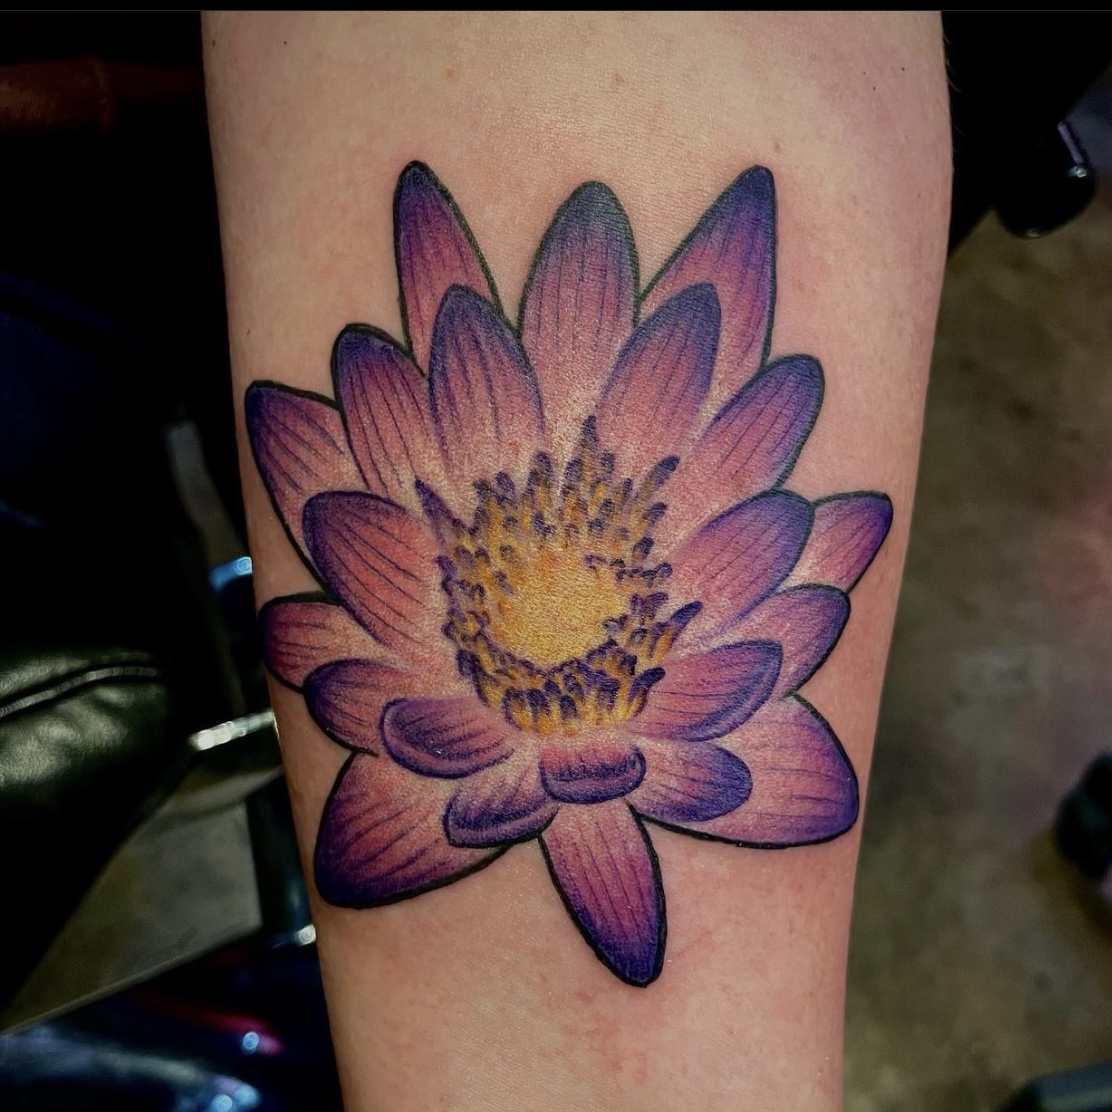 Tattoo of a purple flower from the top Dallas tattoo artist